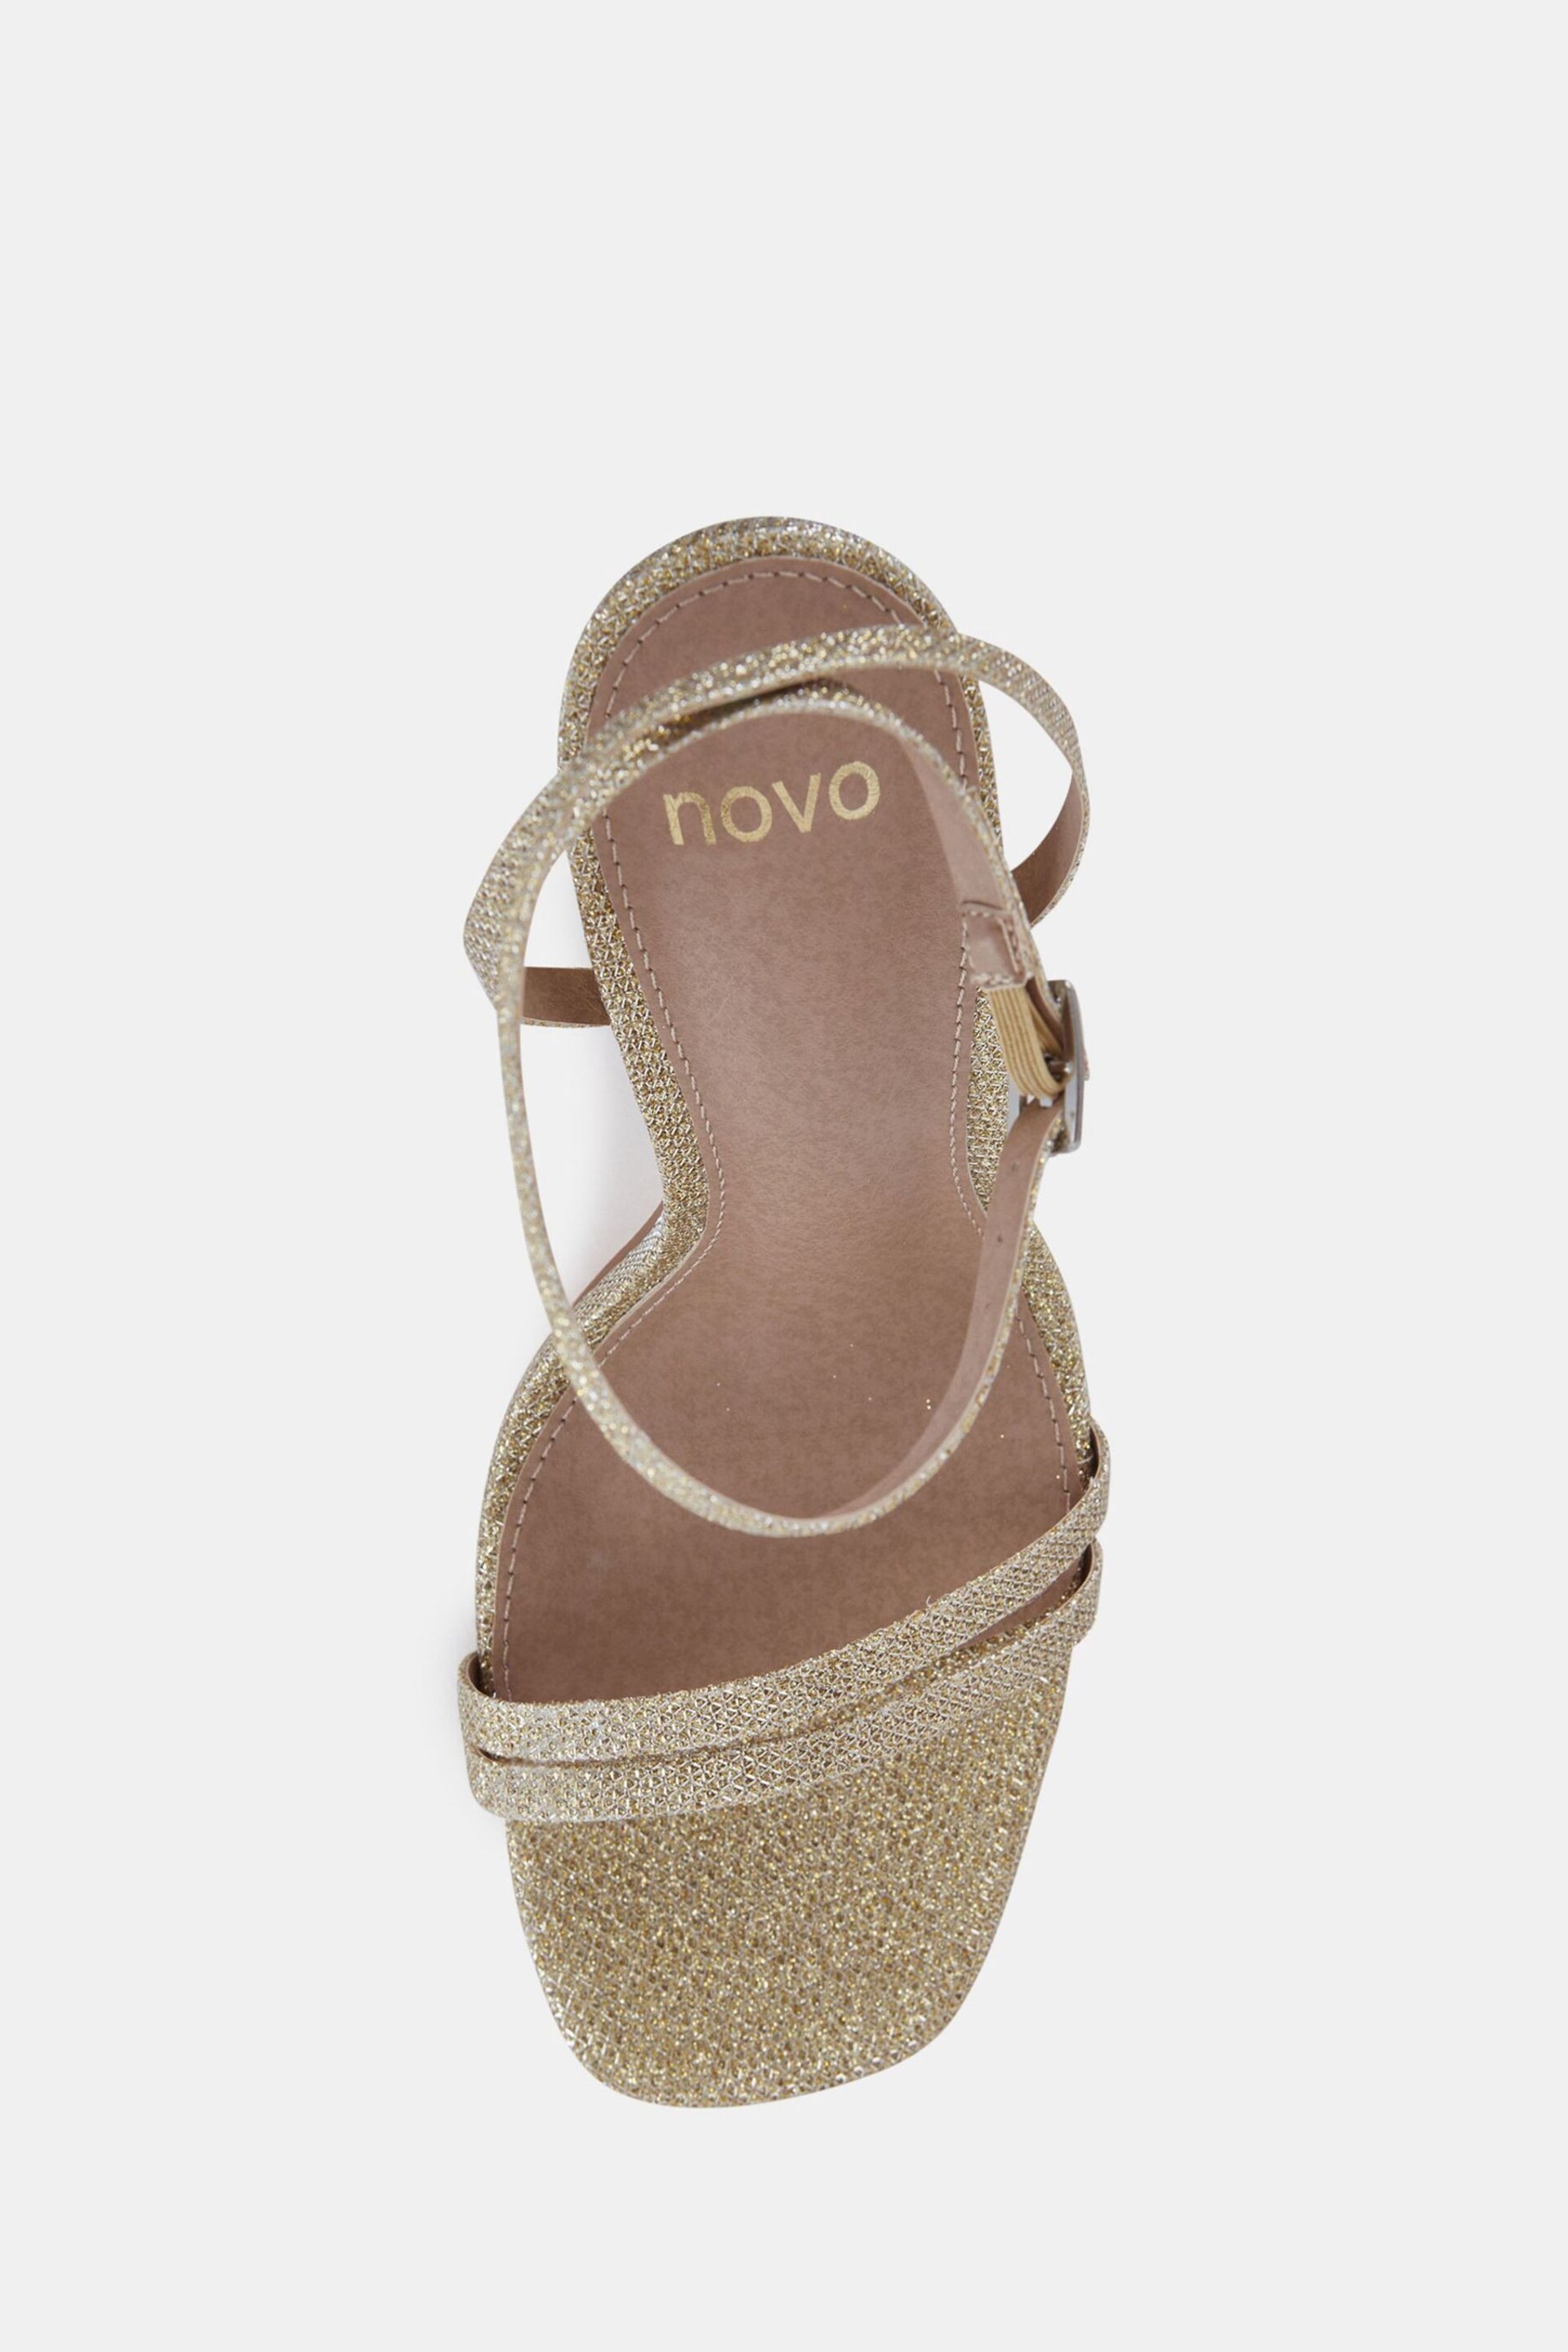 Novo Gold Wide Fit McKenna Strappy Heeled Sandals - Image 5 of 6